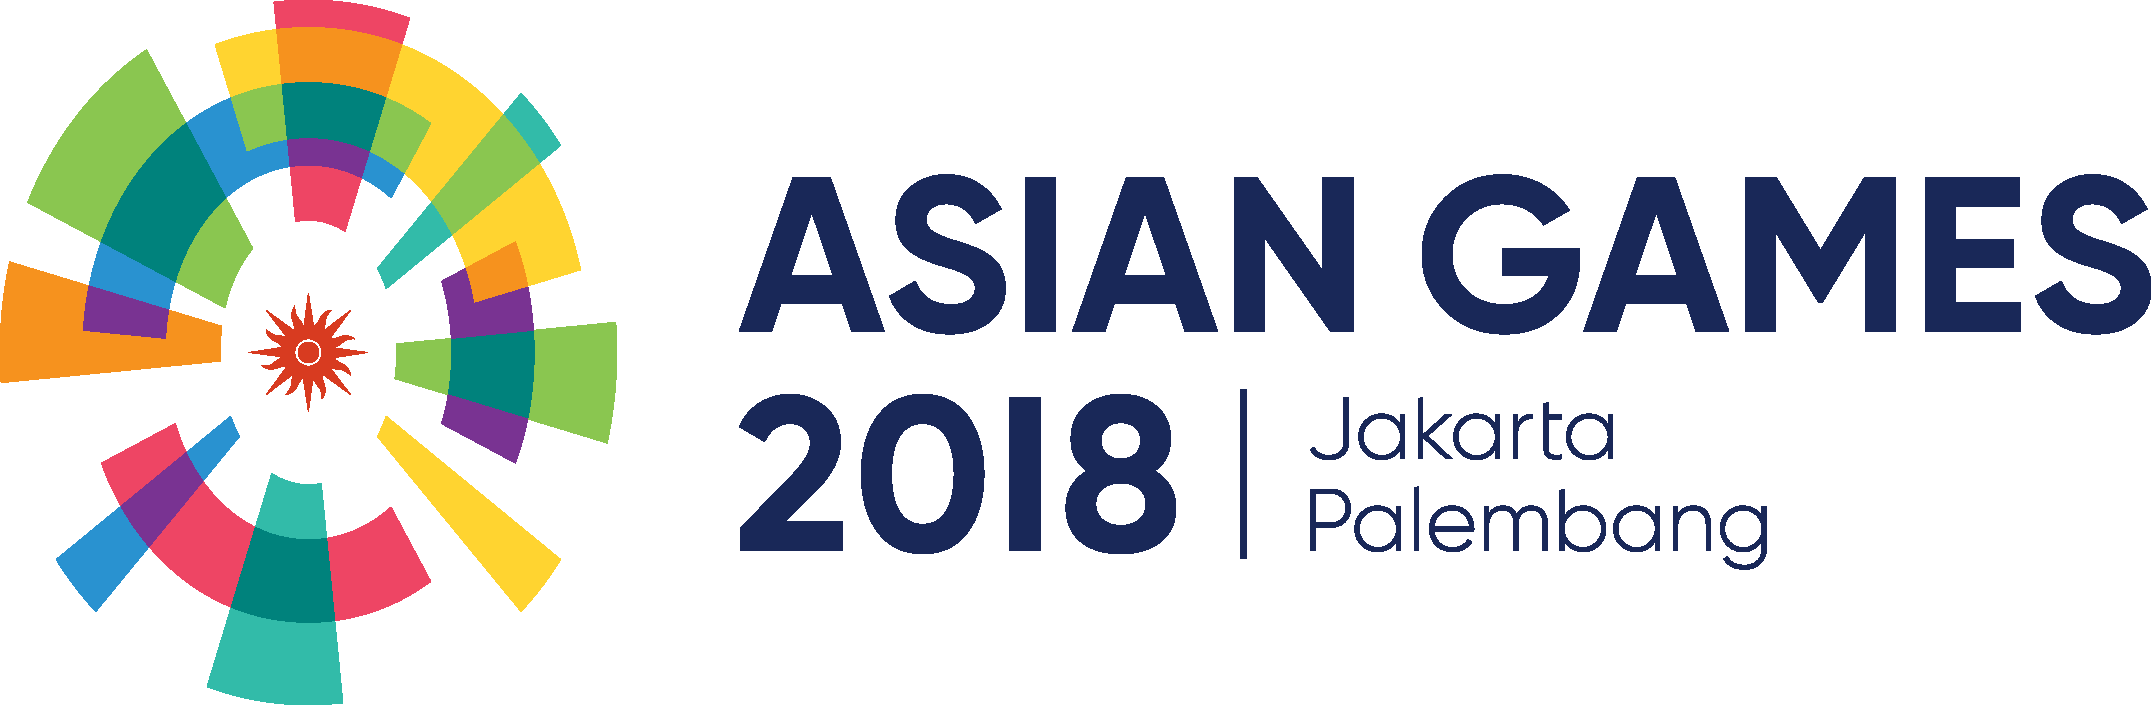 Asian Games 2018 Logo png